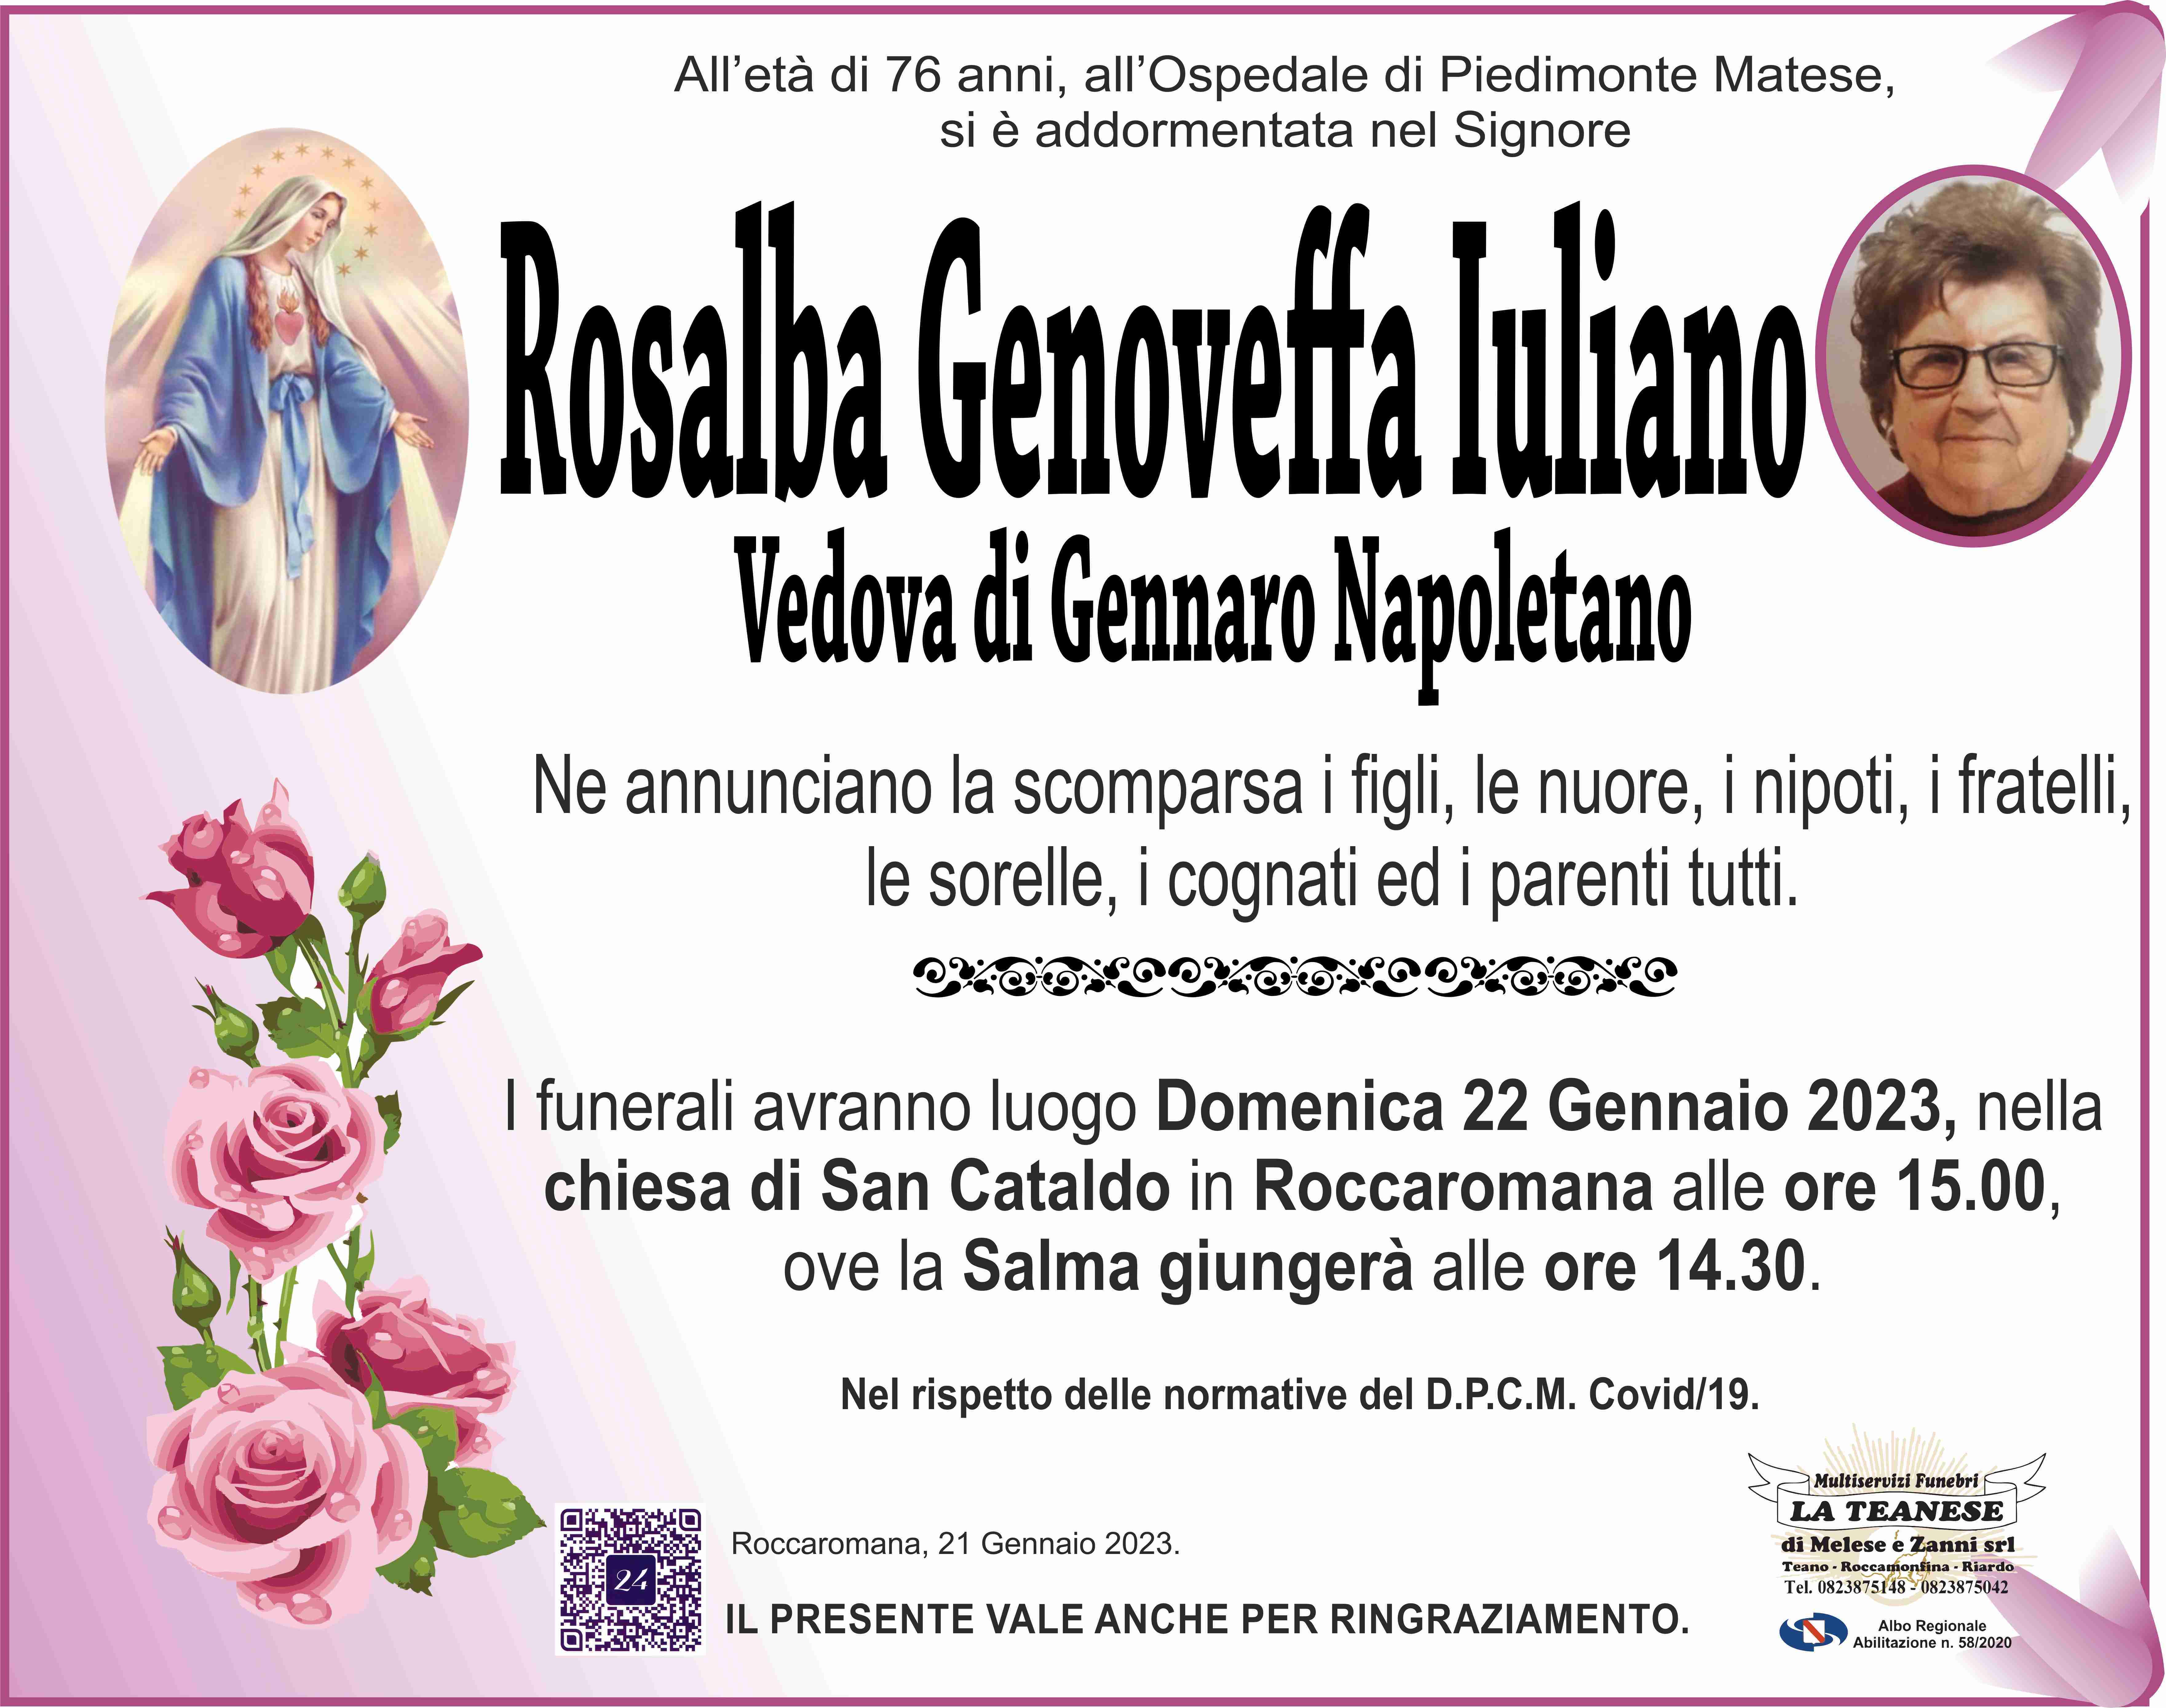 Rosalba Genoveffa Iuliano